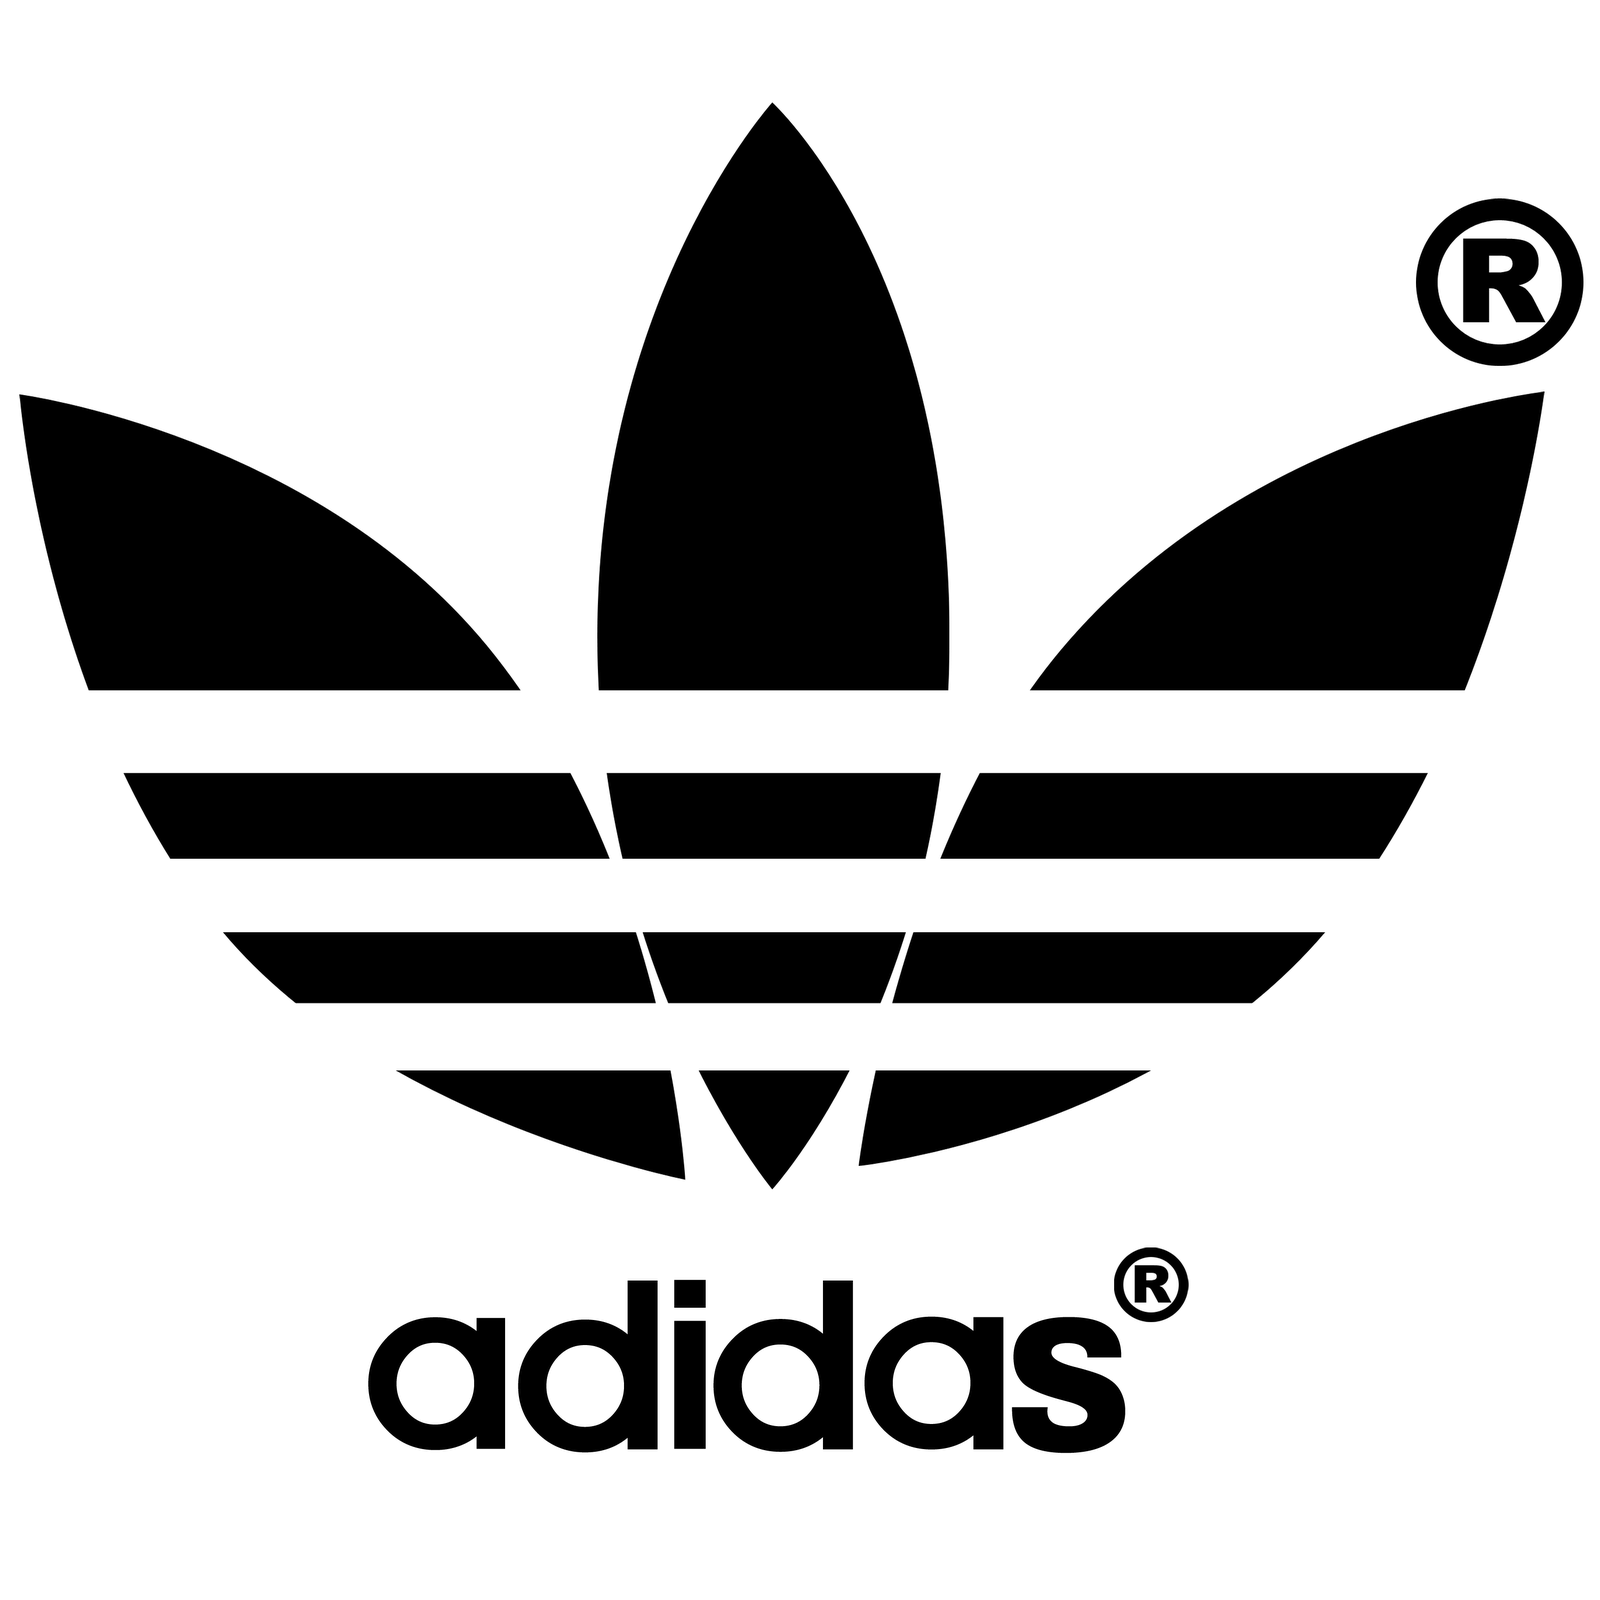 Small Adidas Logo - Adidas Transparent Small Logo Png Image